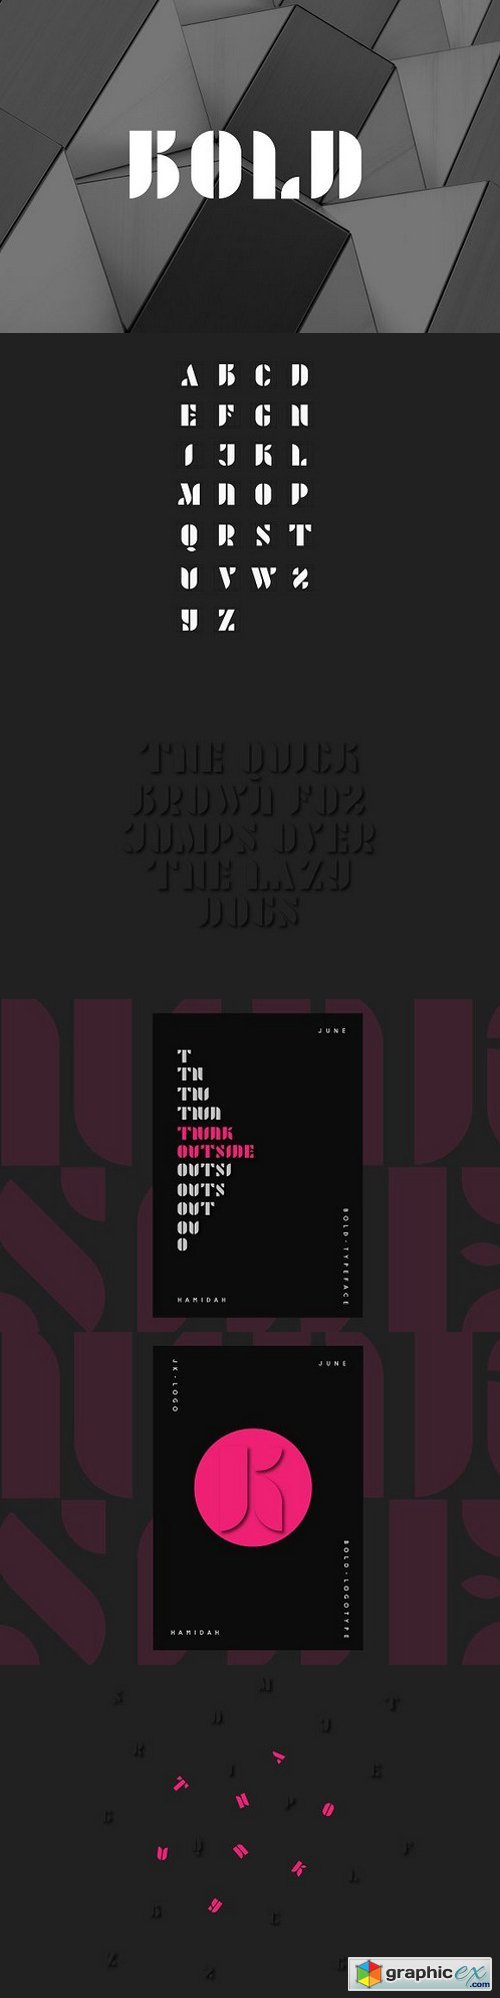 BOLD - Typeface